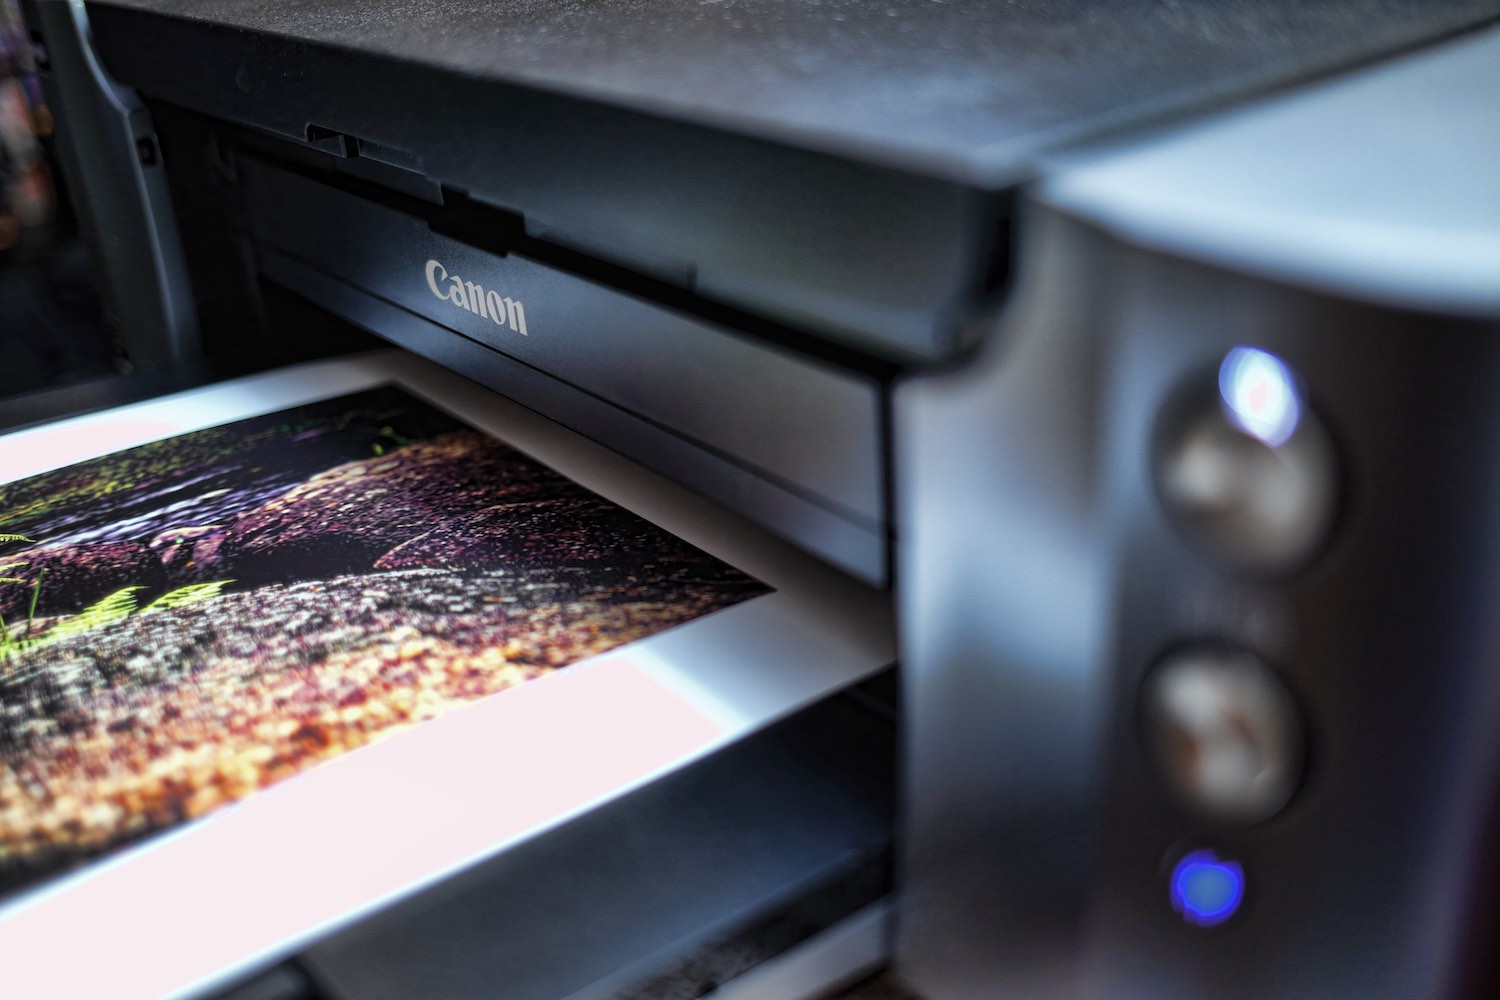 Printing on a Canon Pixma Pro printer.